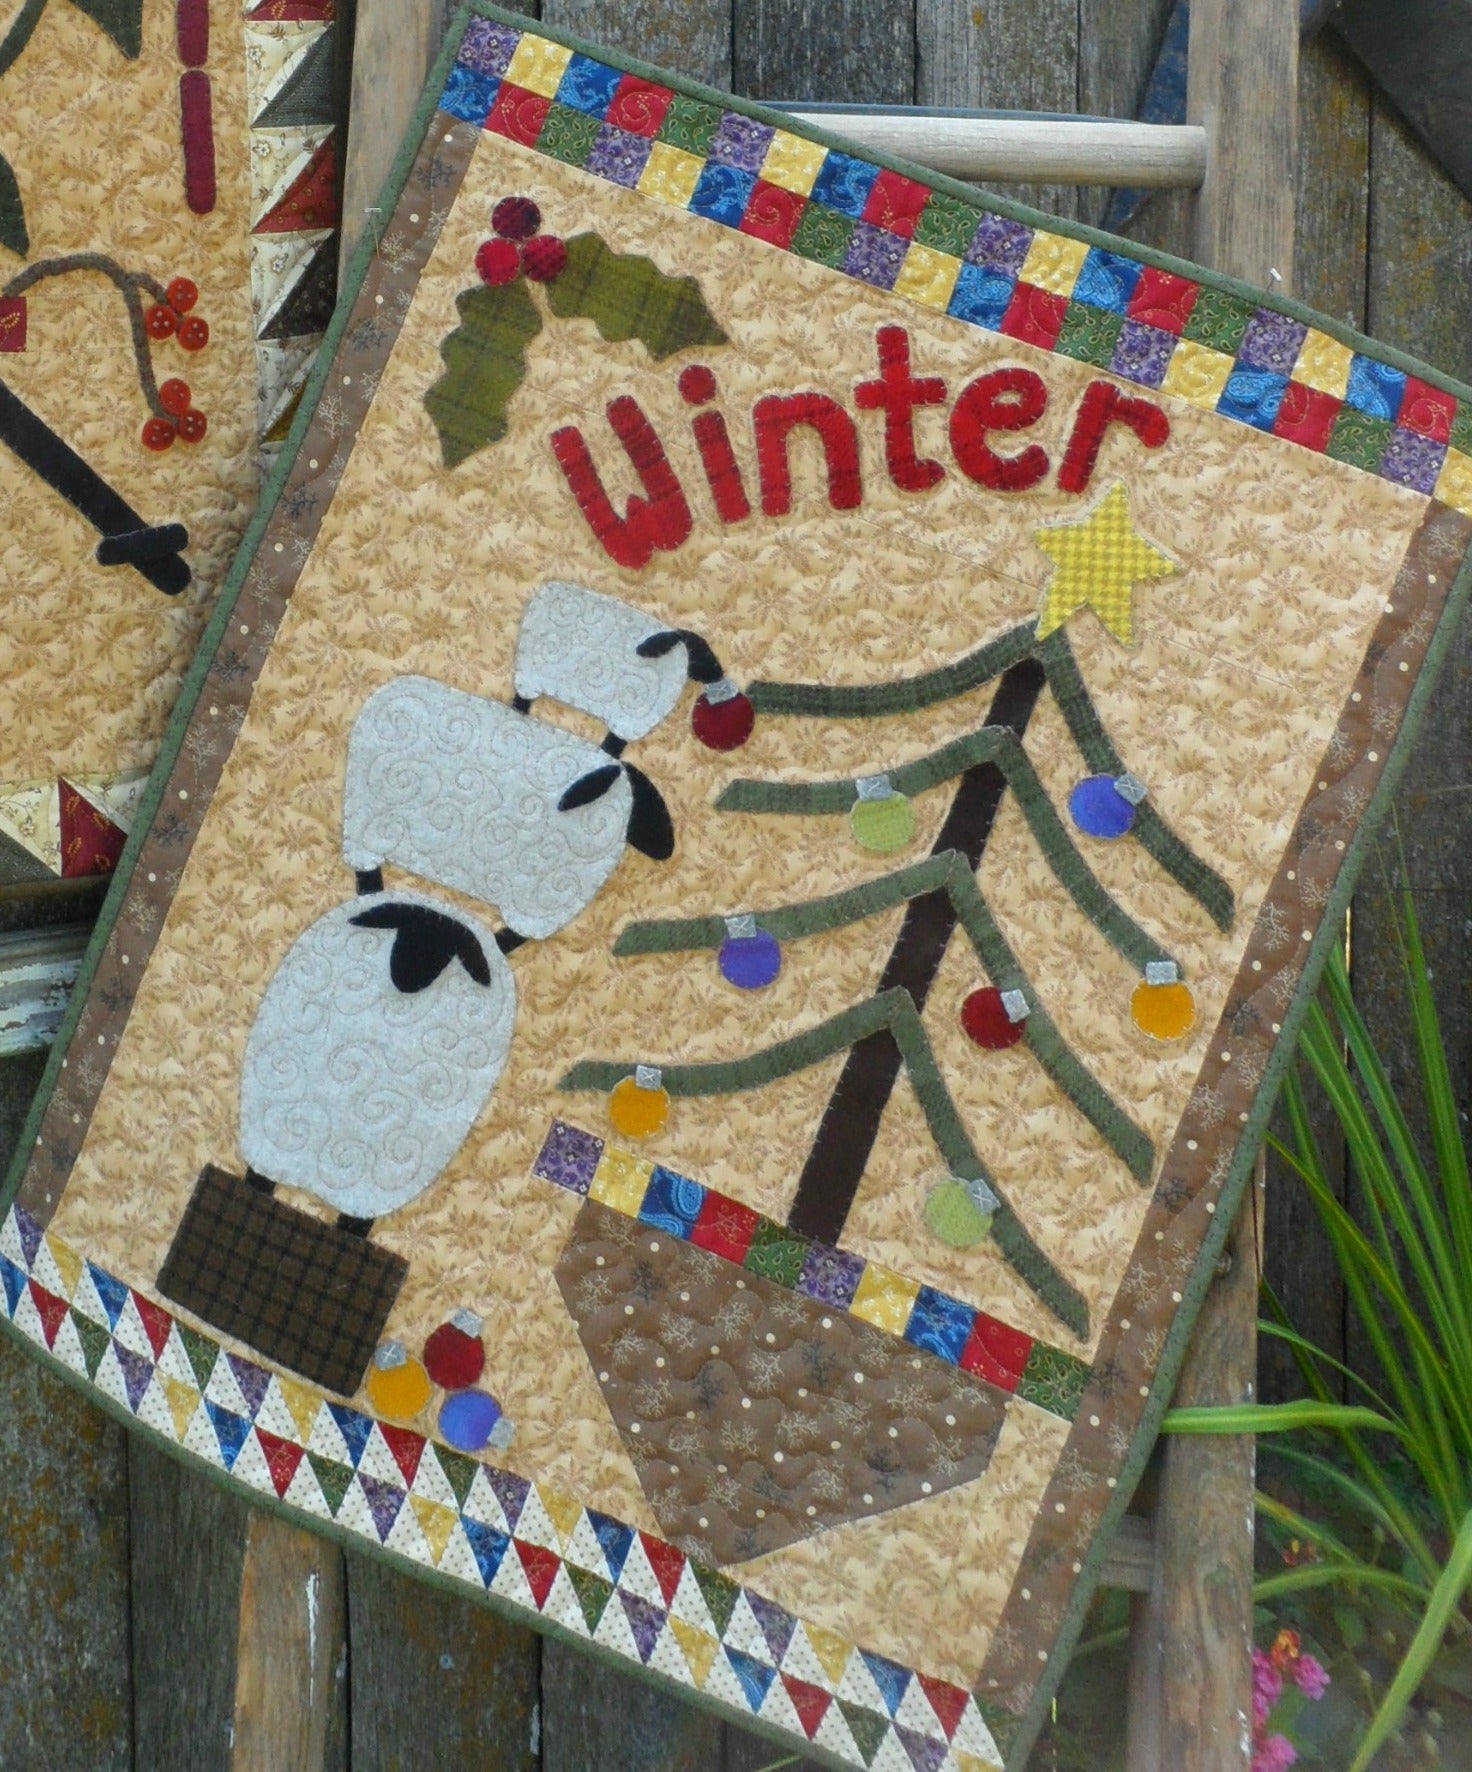 Wool applique on fabric seasonal wall hanging - Winter